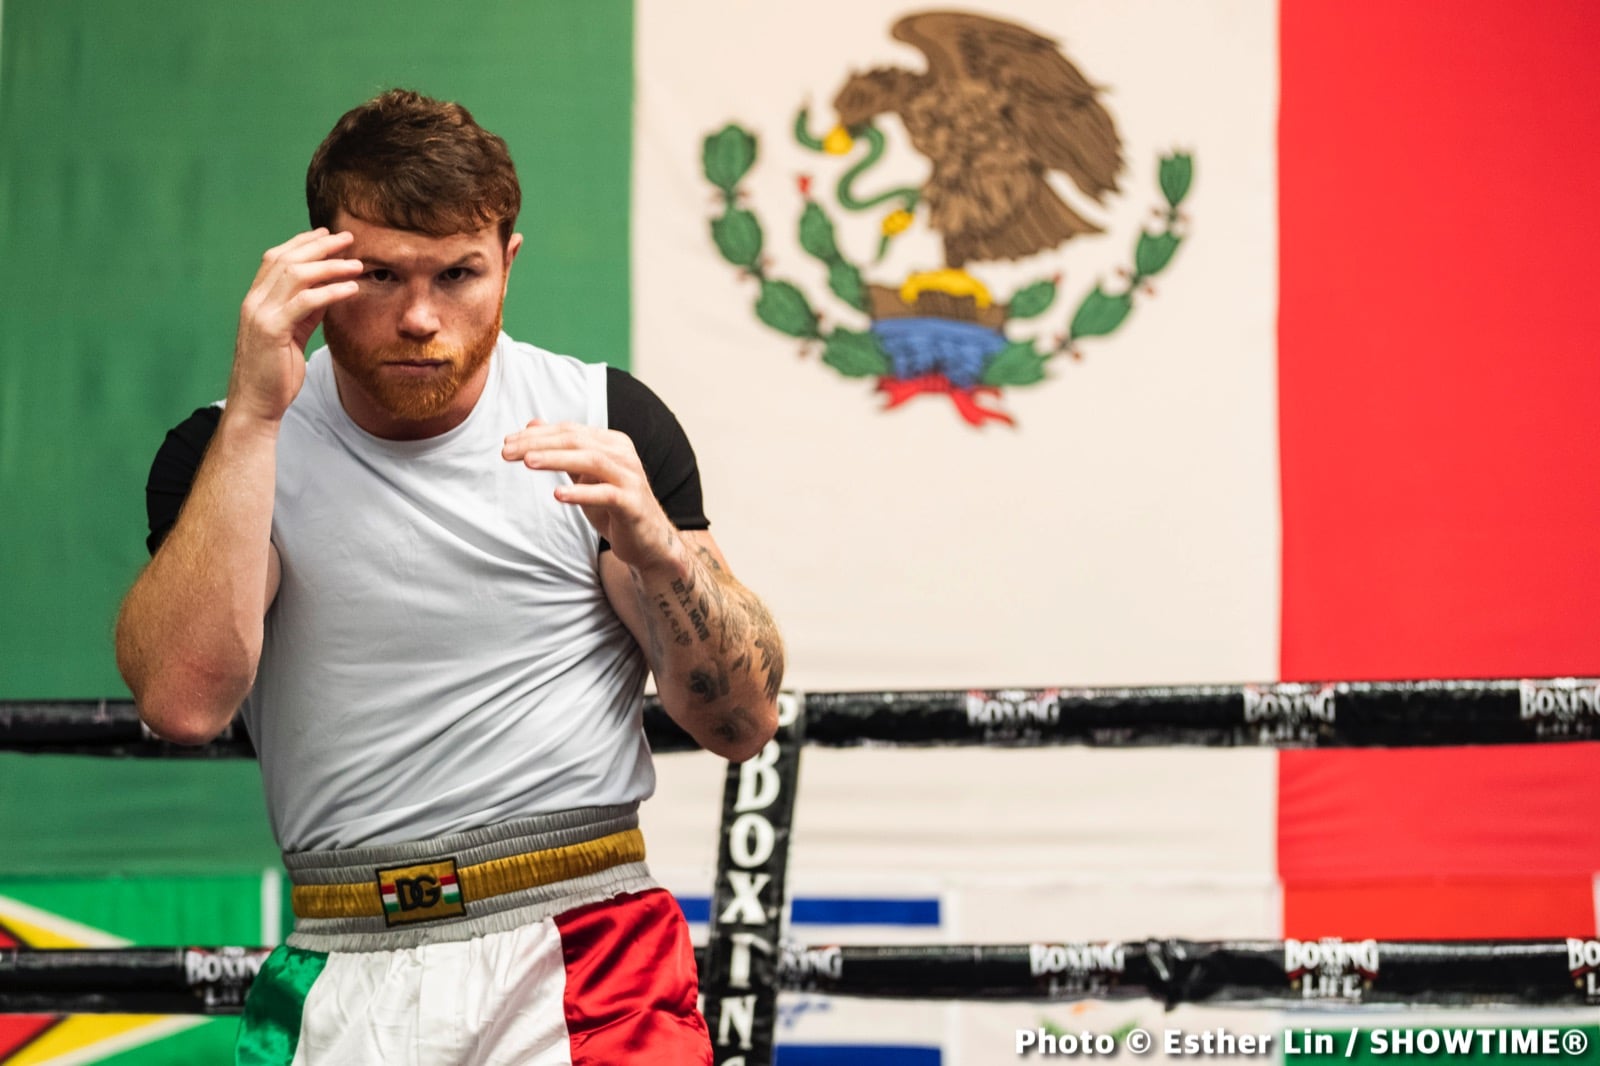 Eddy Reynoso boxing image / photo